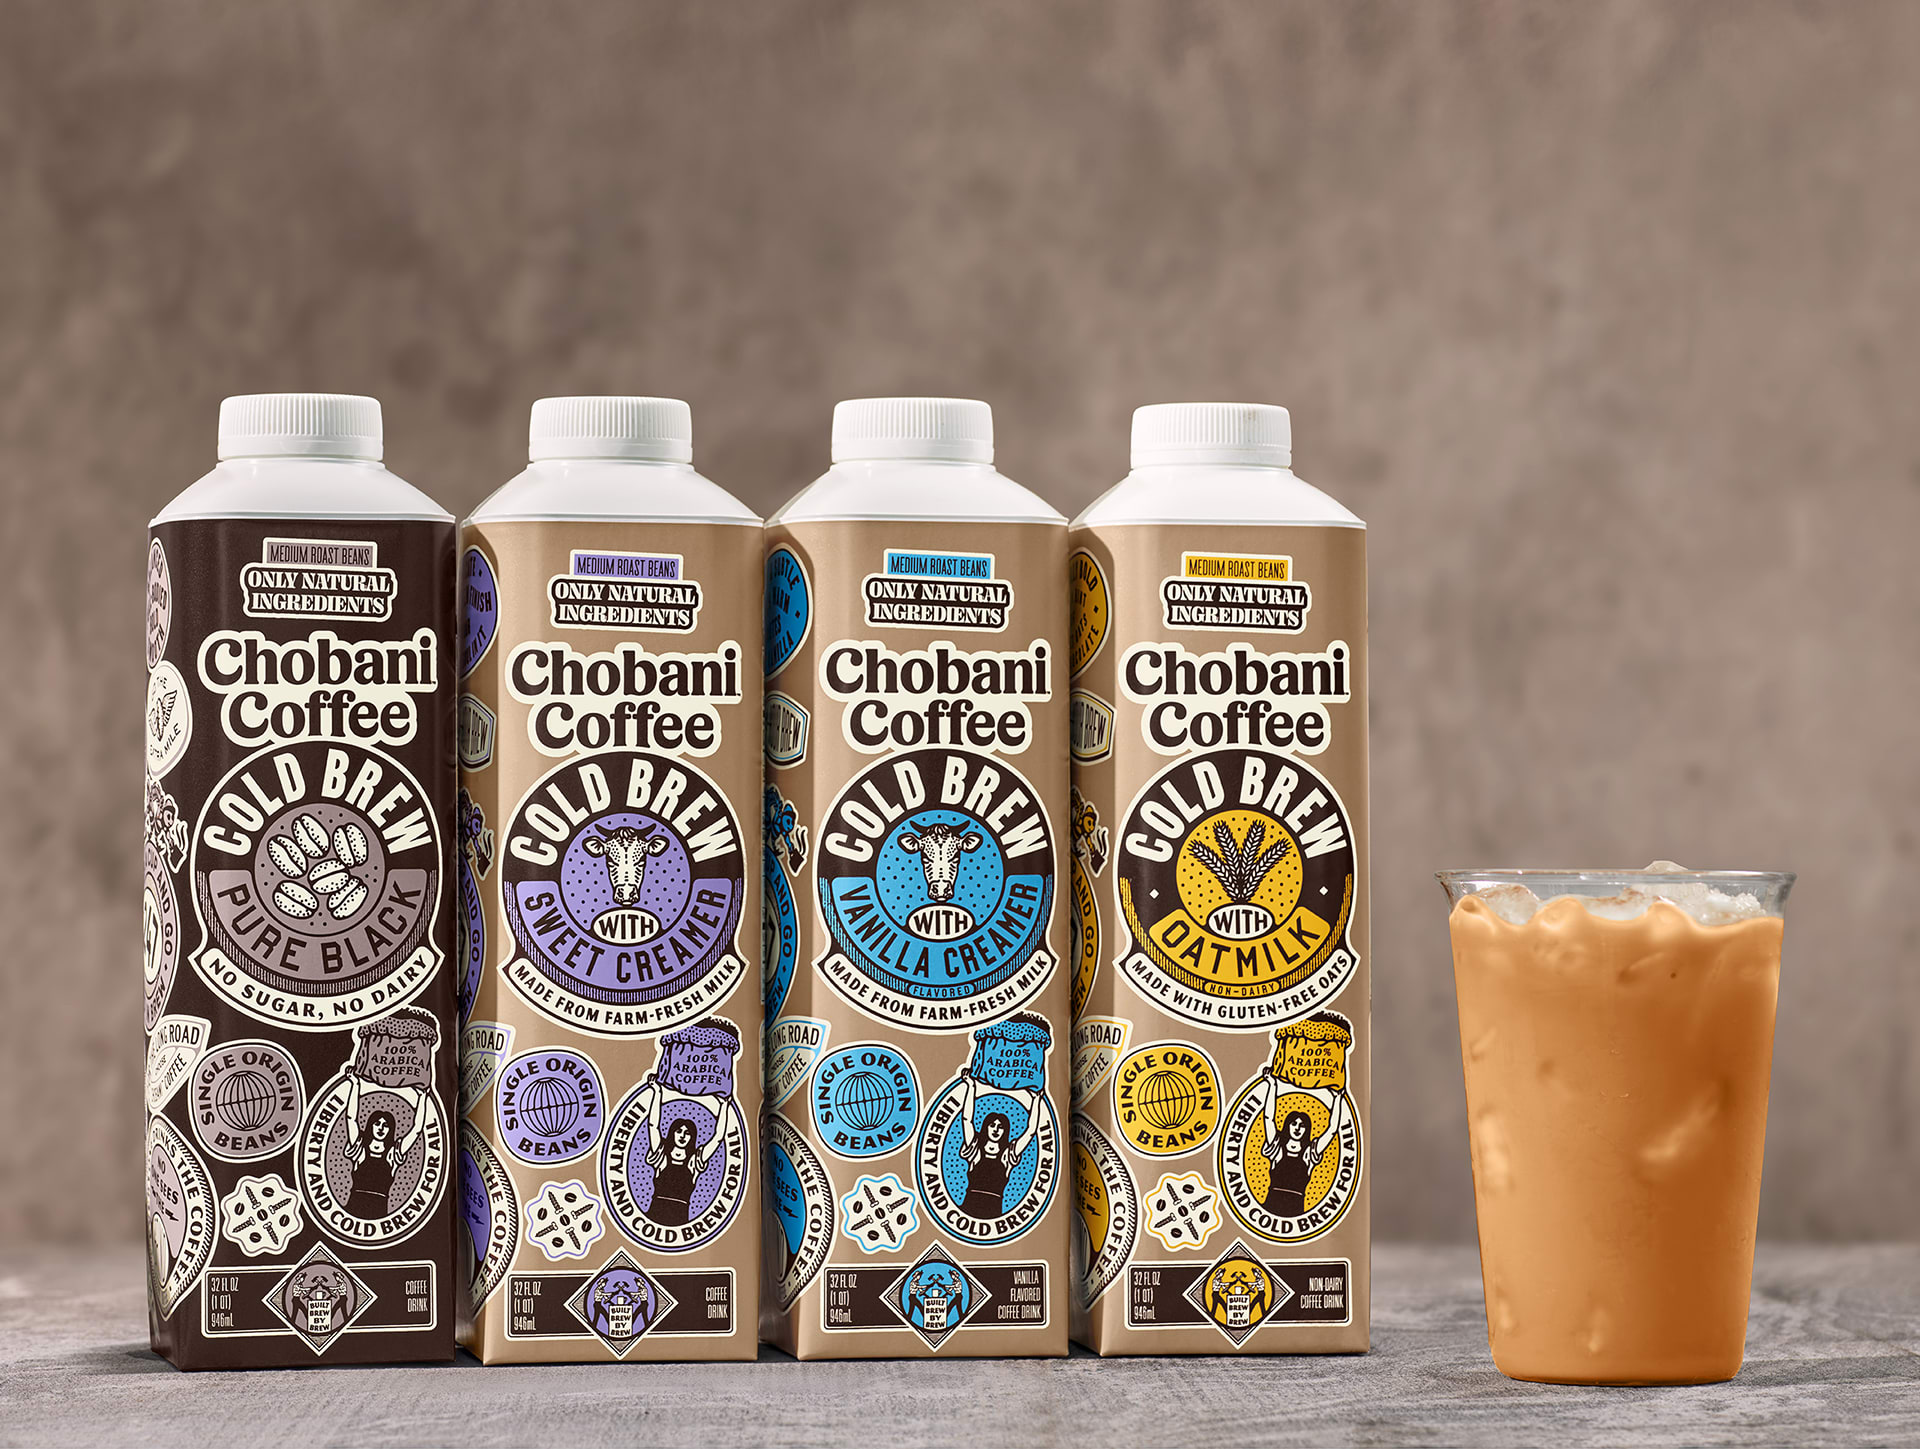 Chobani to debut chilly brew espresso drinks in additional push past yogurt